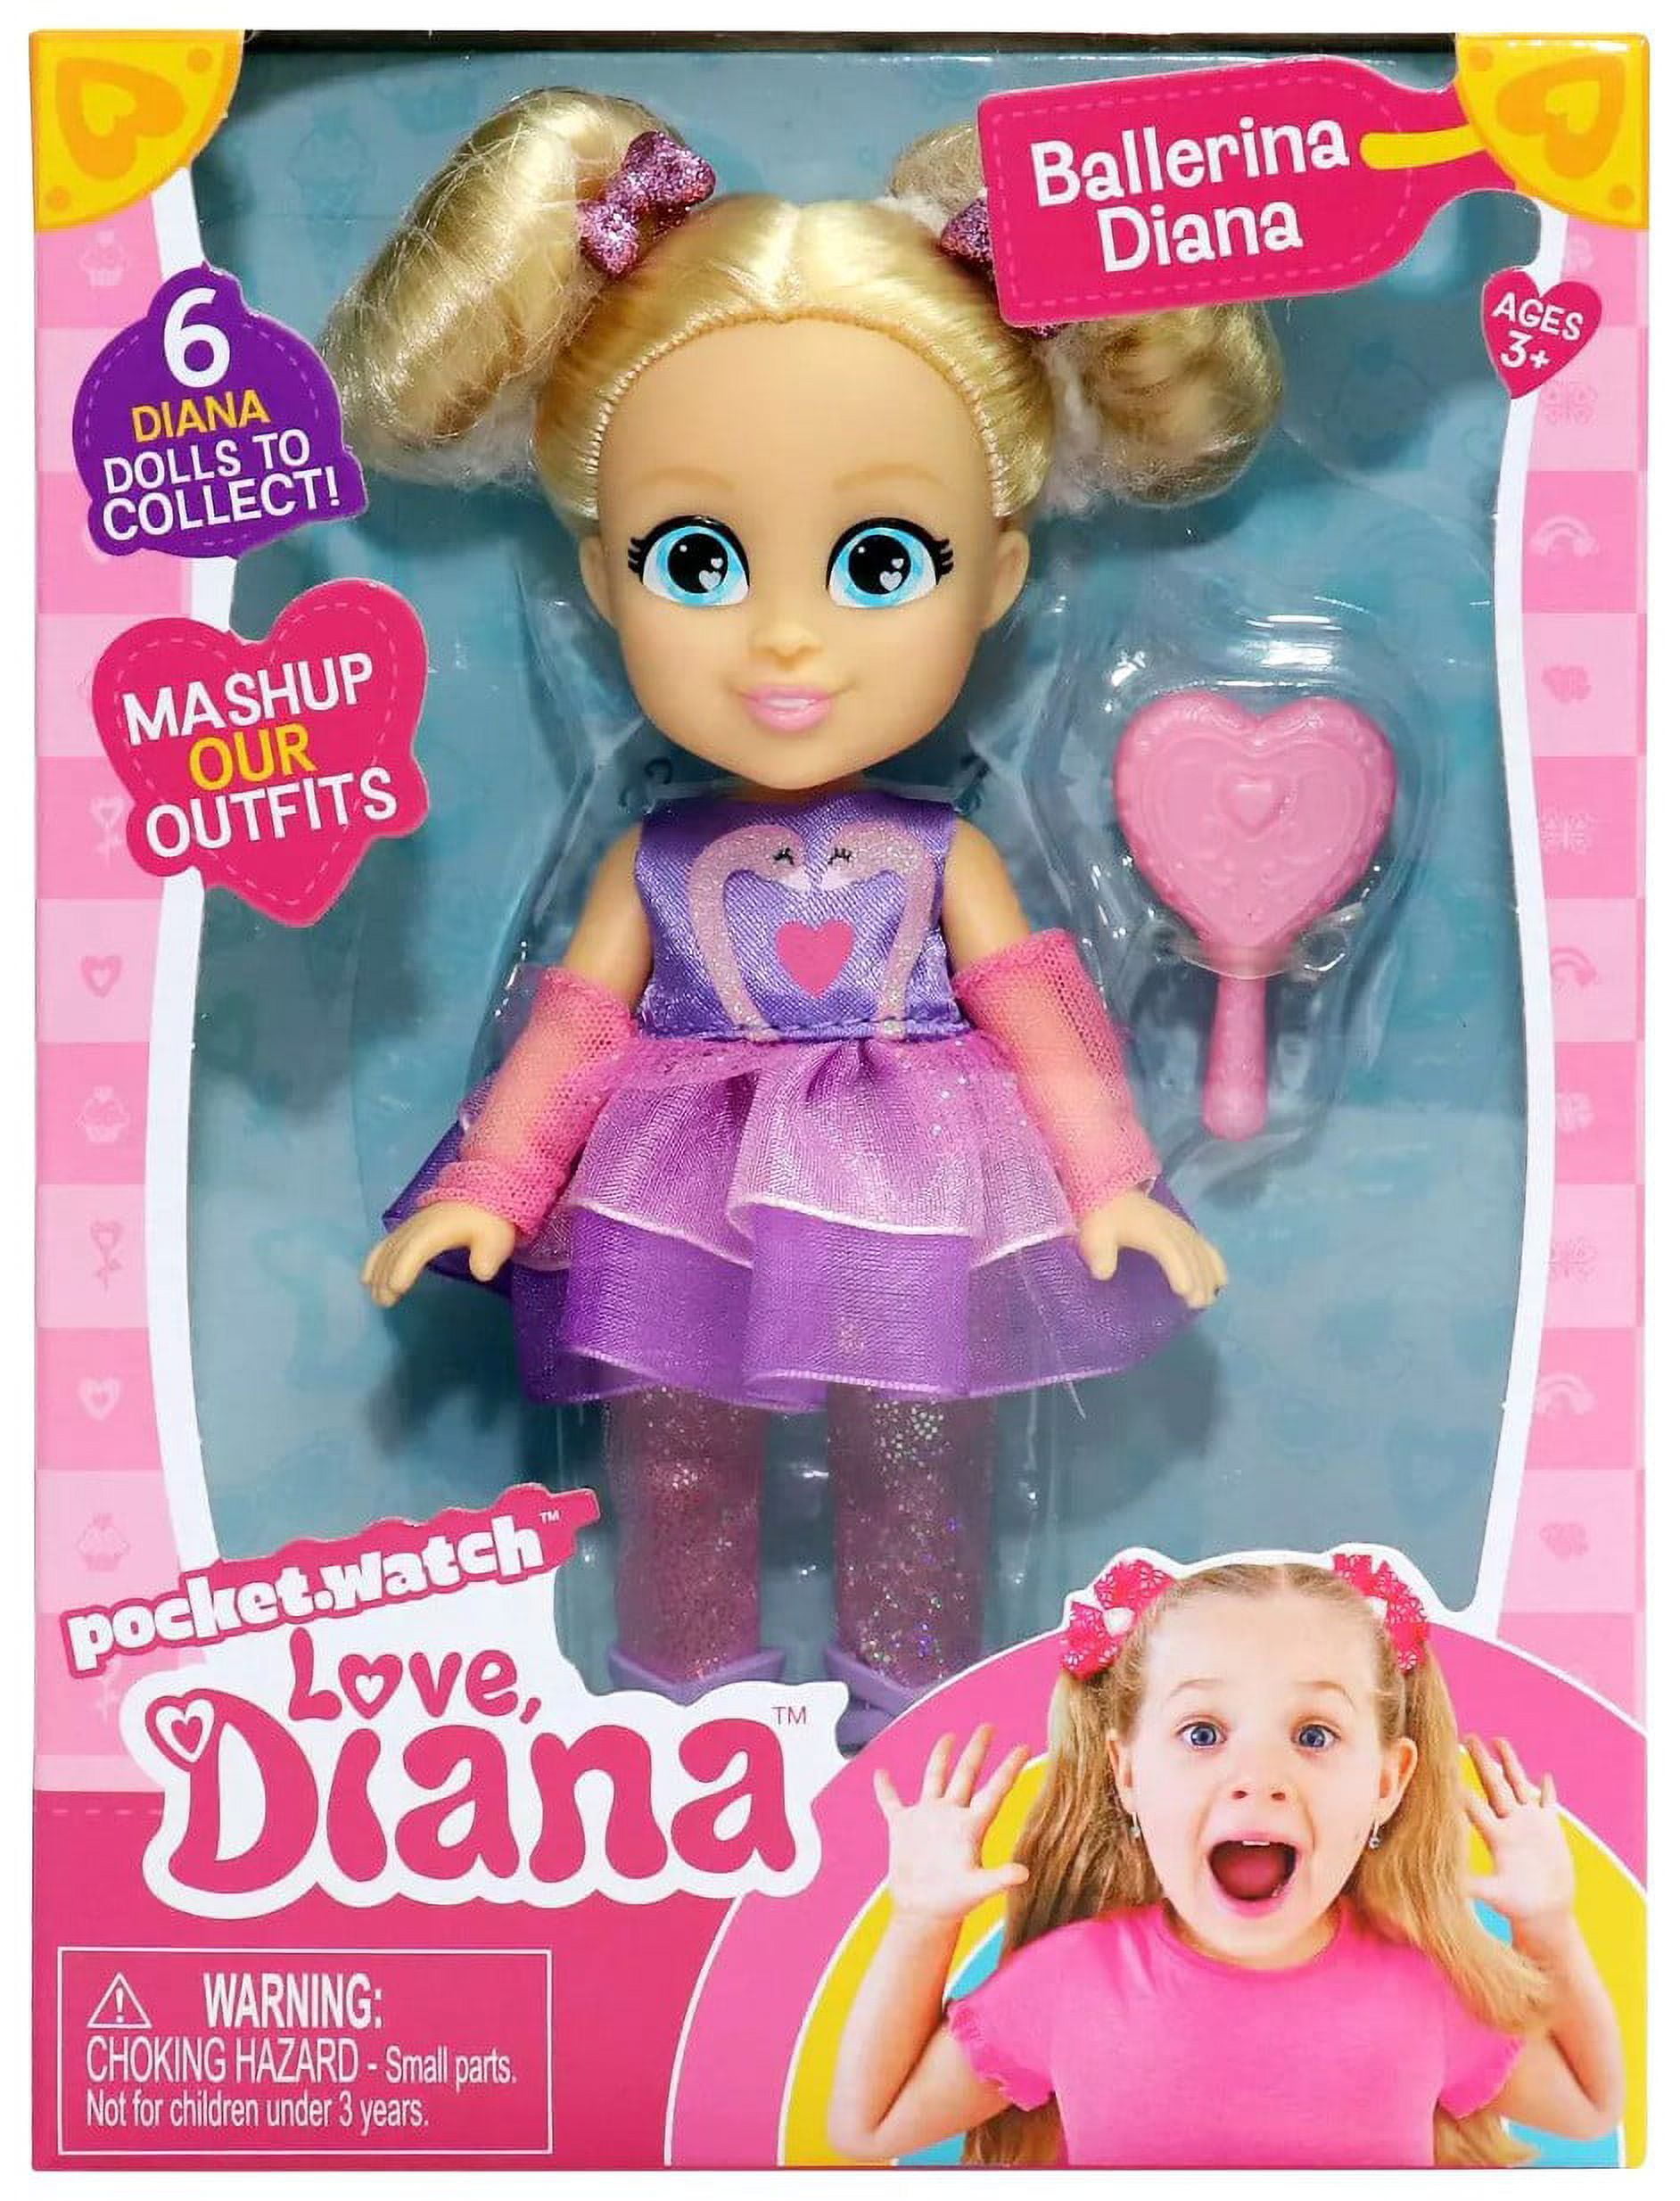 Love Diana Princess of Play Pocket Watch Doll by Headstart